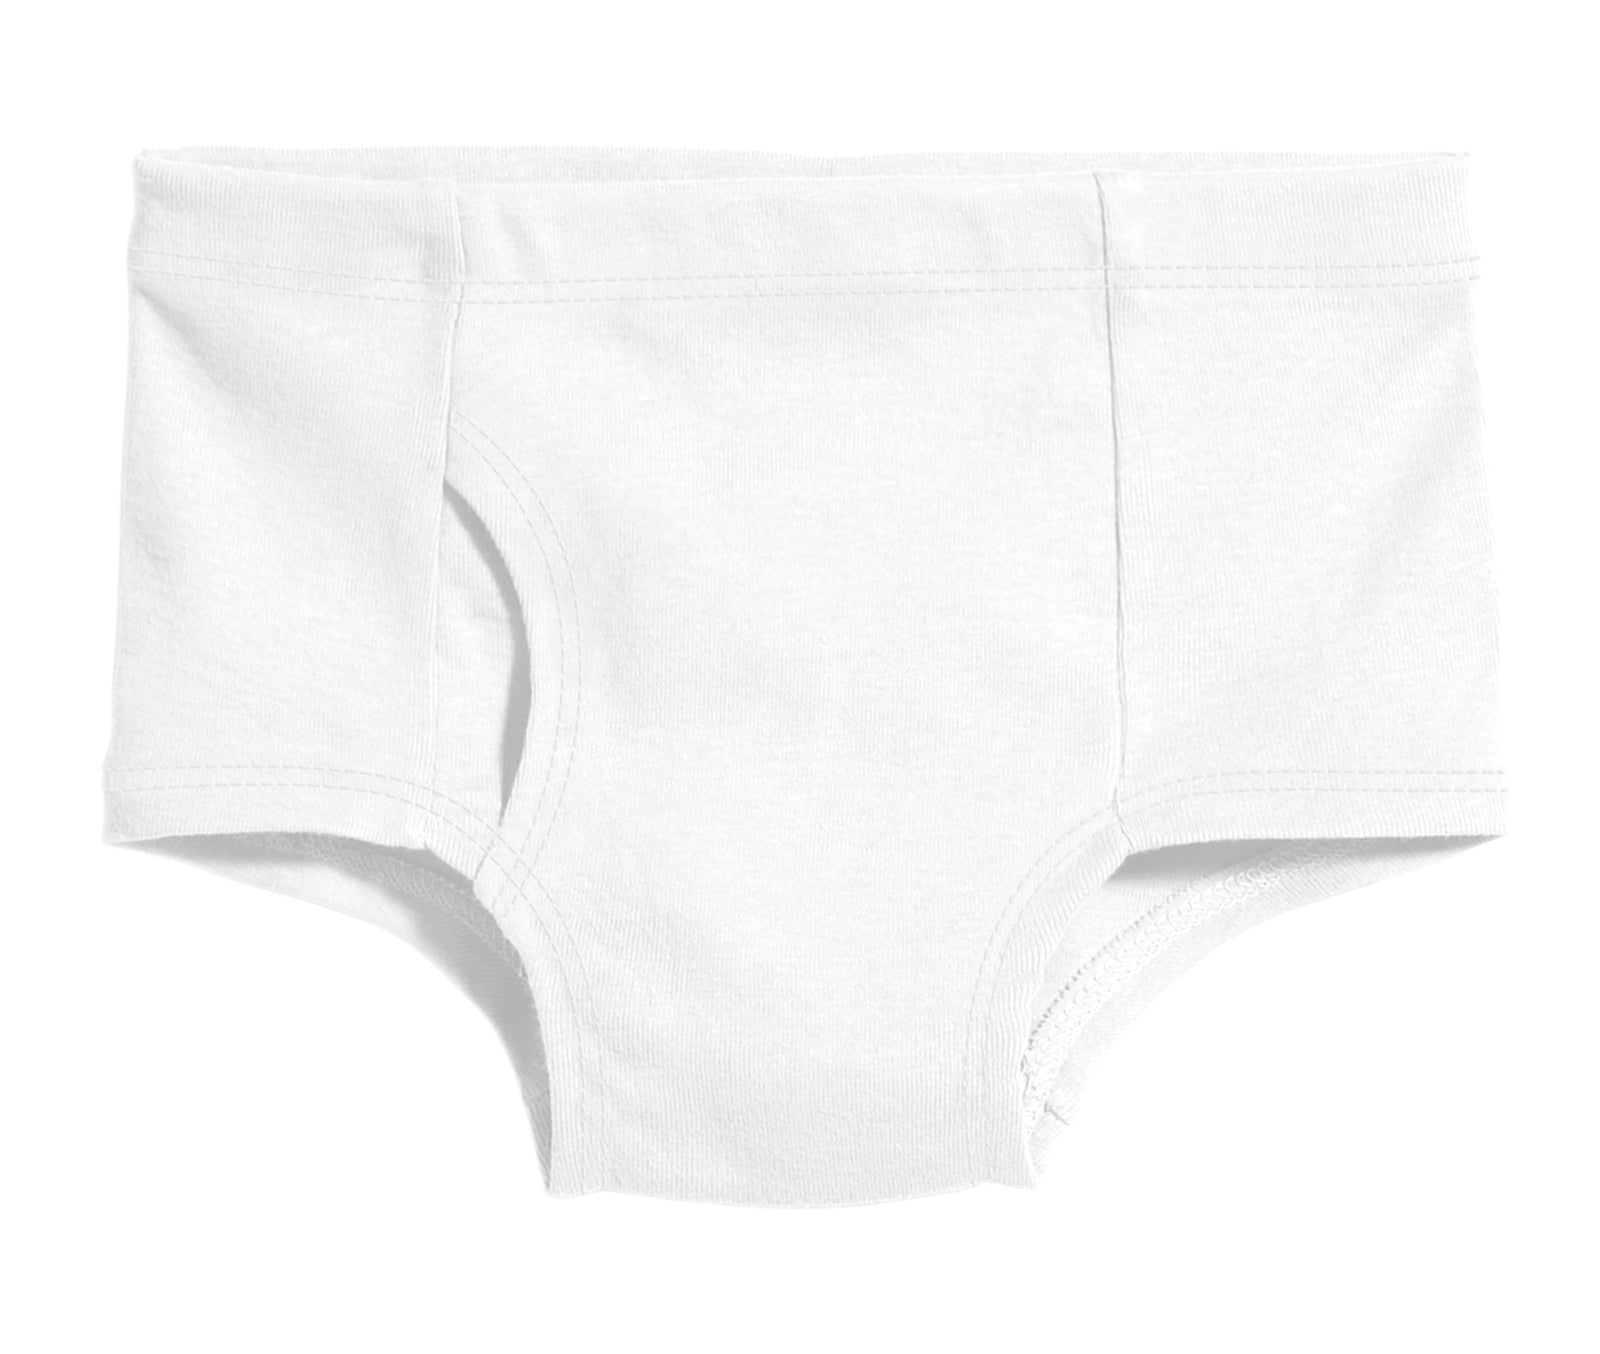 Buy BASIC Underwear Briefs, 100% Pure Cotton Breathable & Super Soft